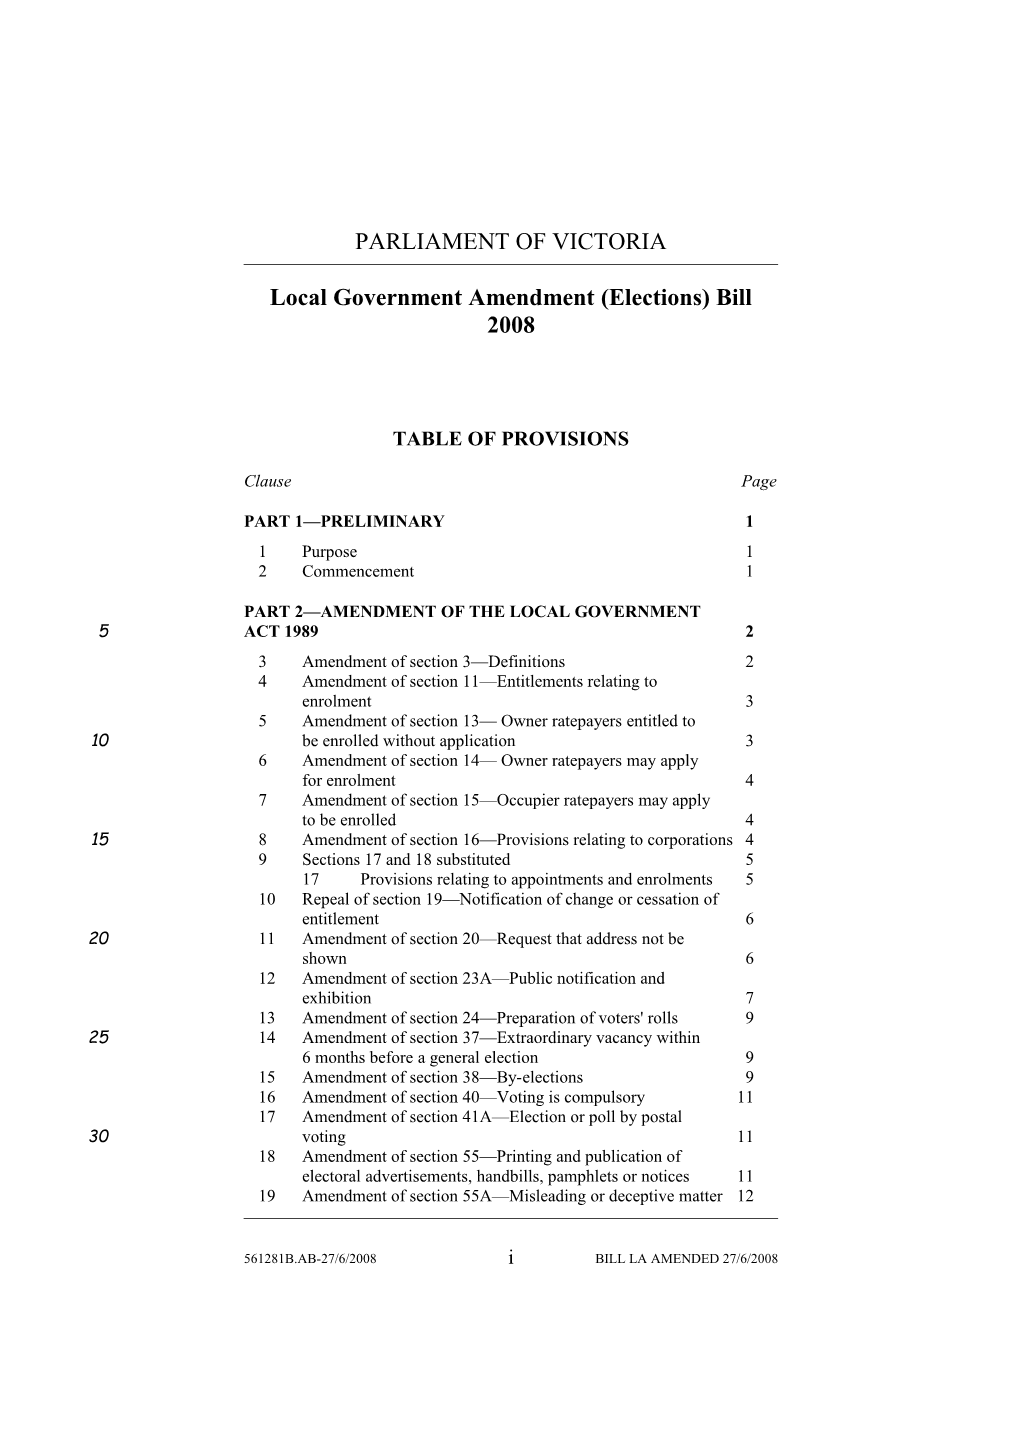 Local Government Amendment (Elections) Bill 2008